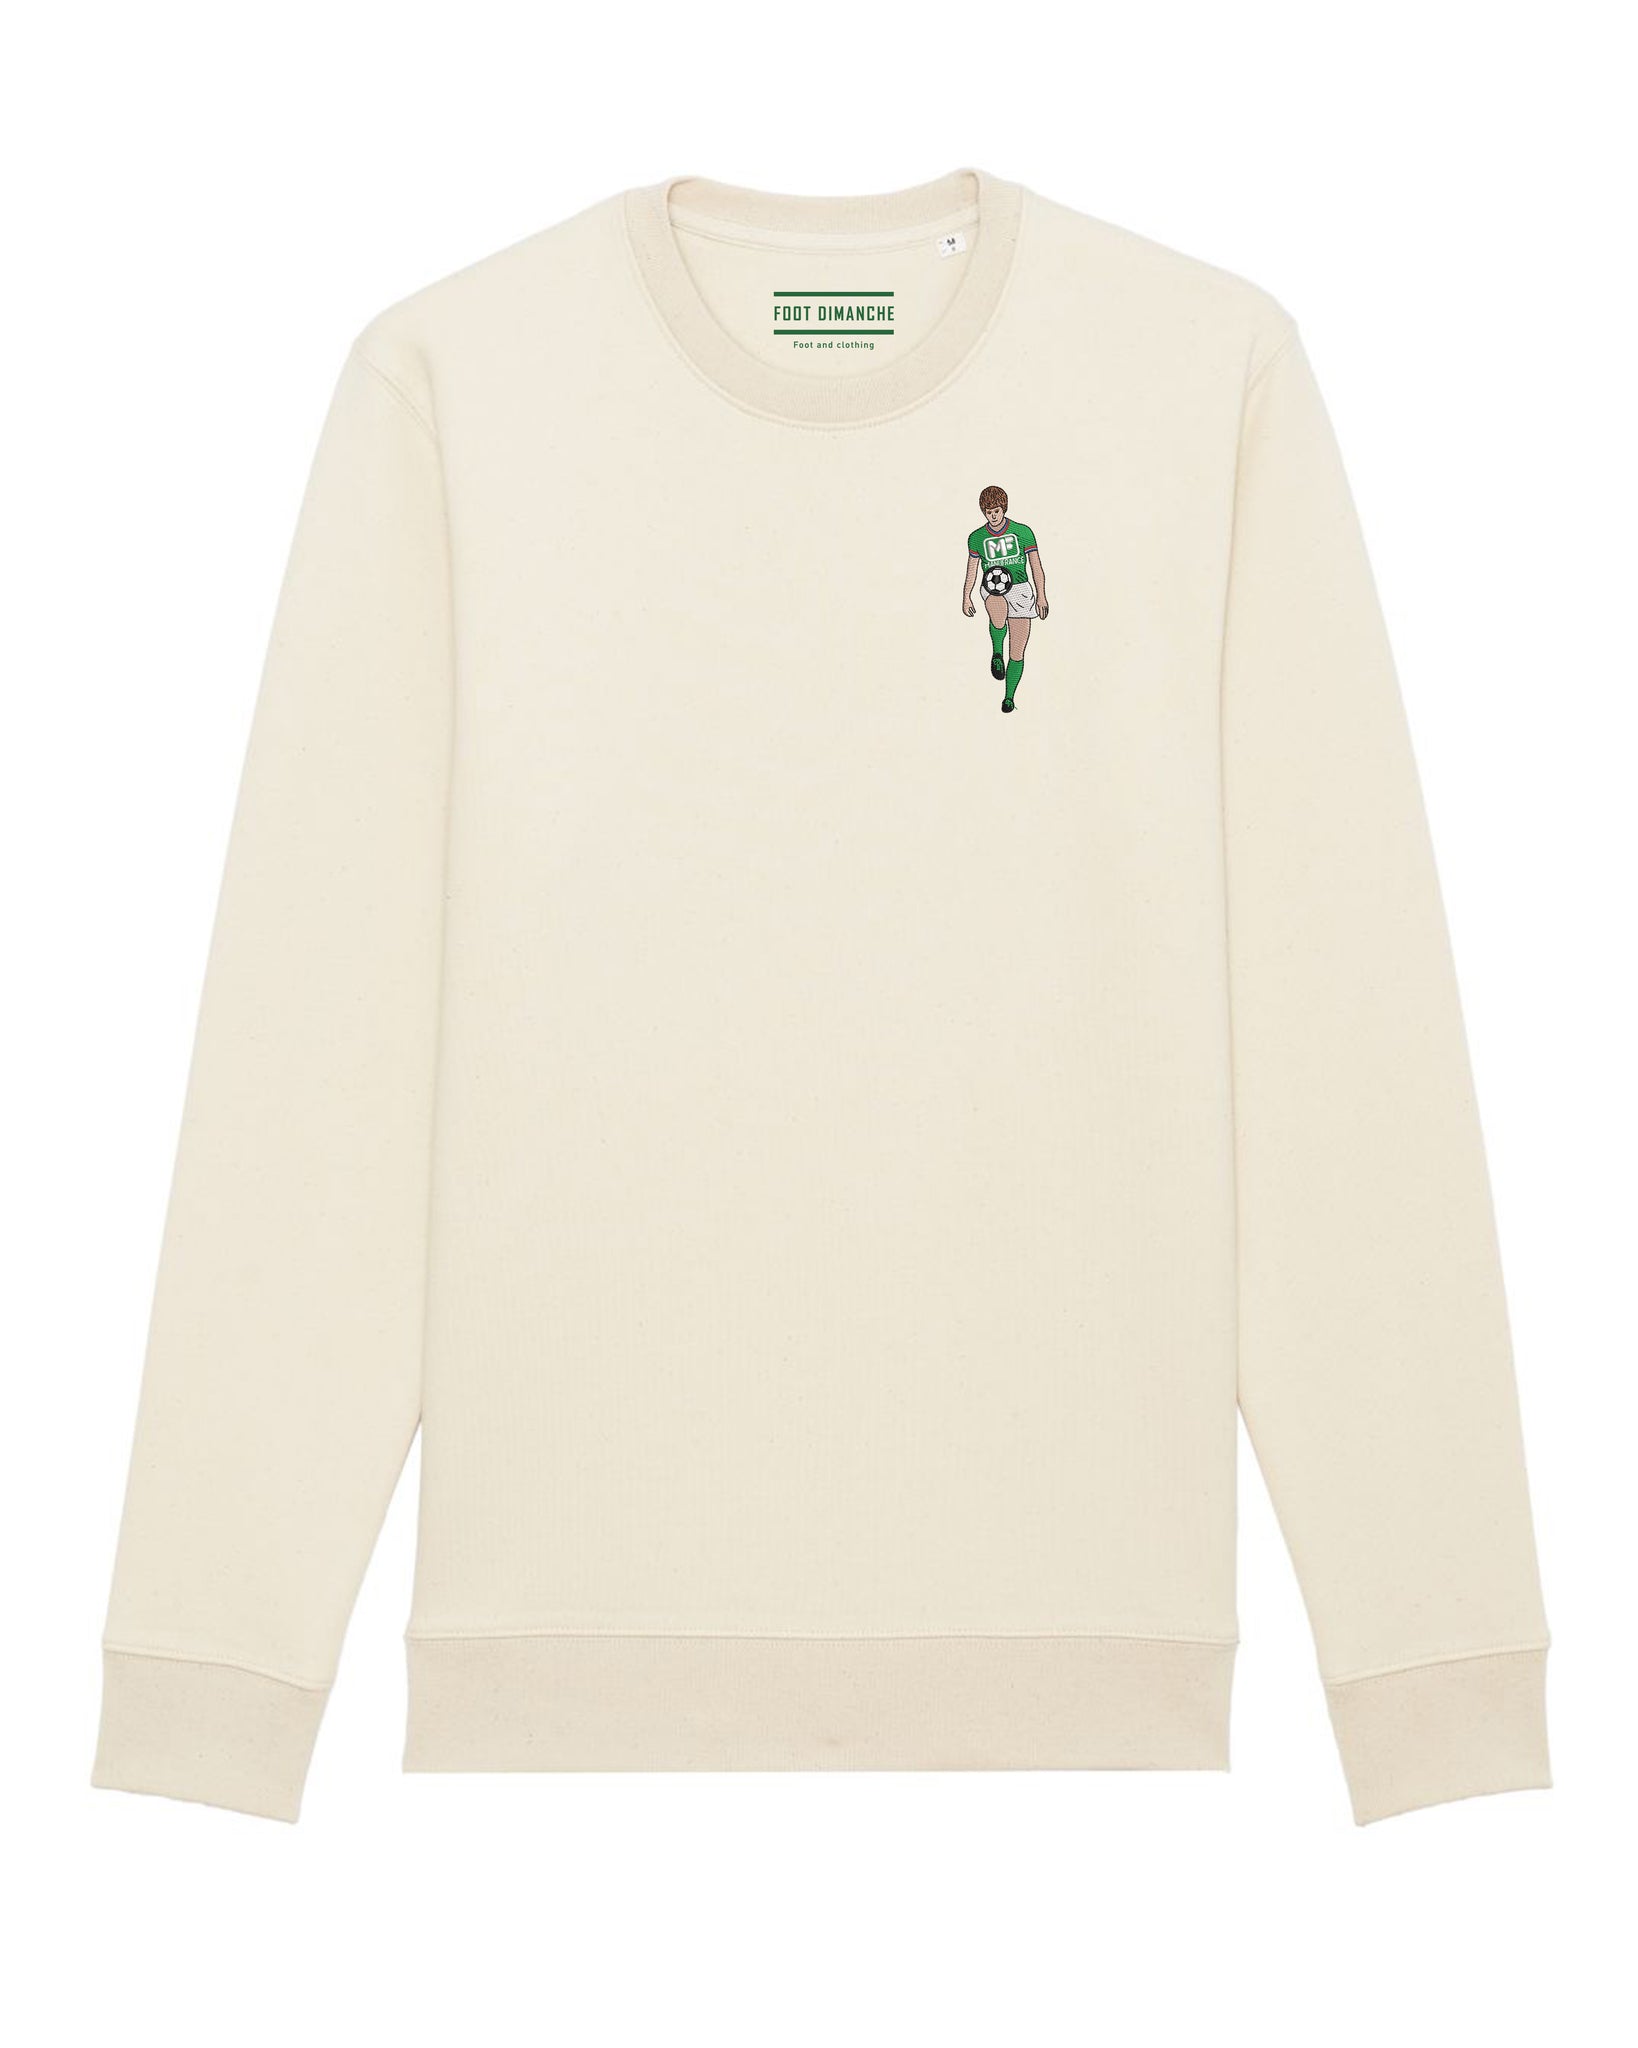 Embroidered Manufrance Player sweatshirt